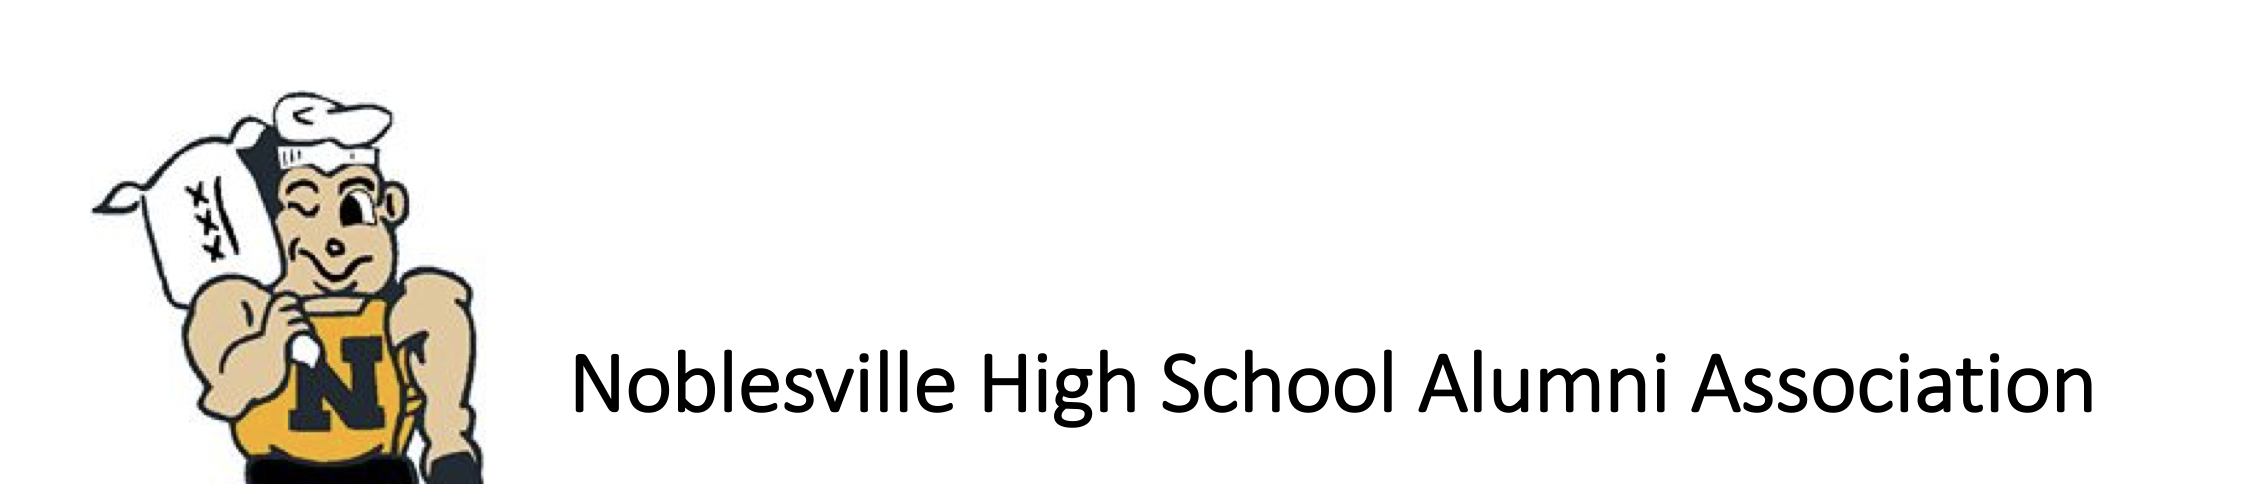 Logo for Noblesville High School Alumni Association